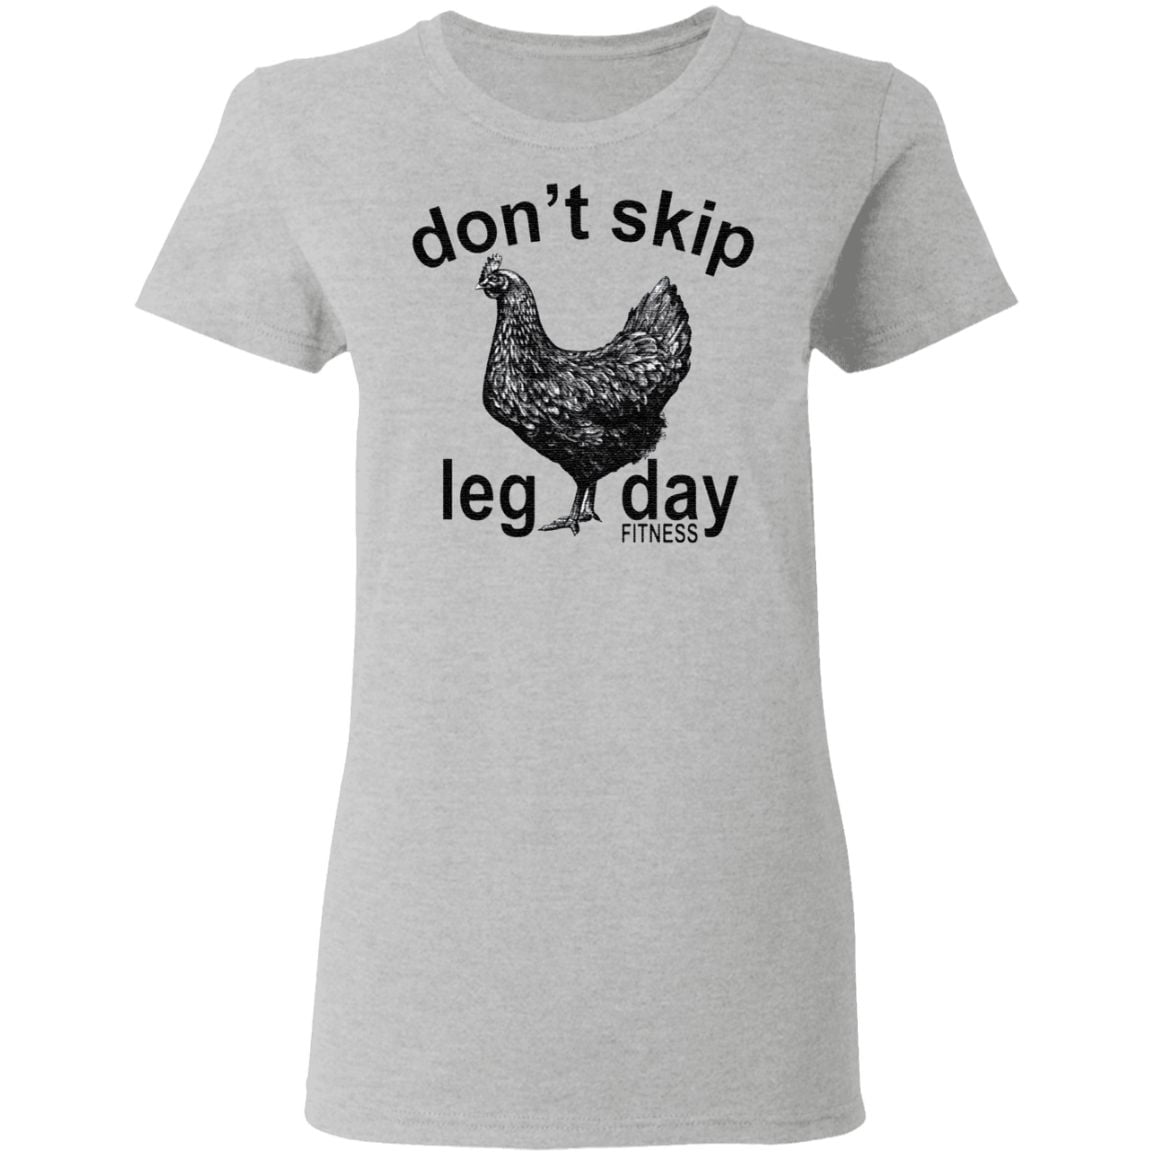 Don’t skip leg day fitness tee co chicken t shirt